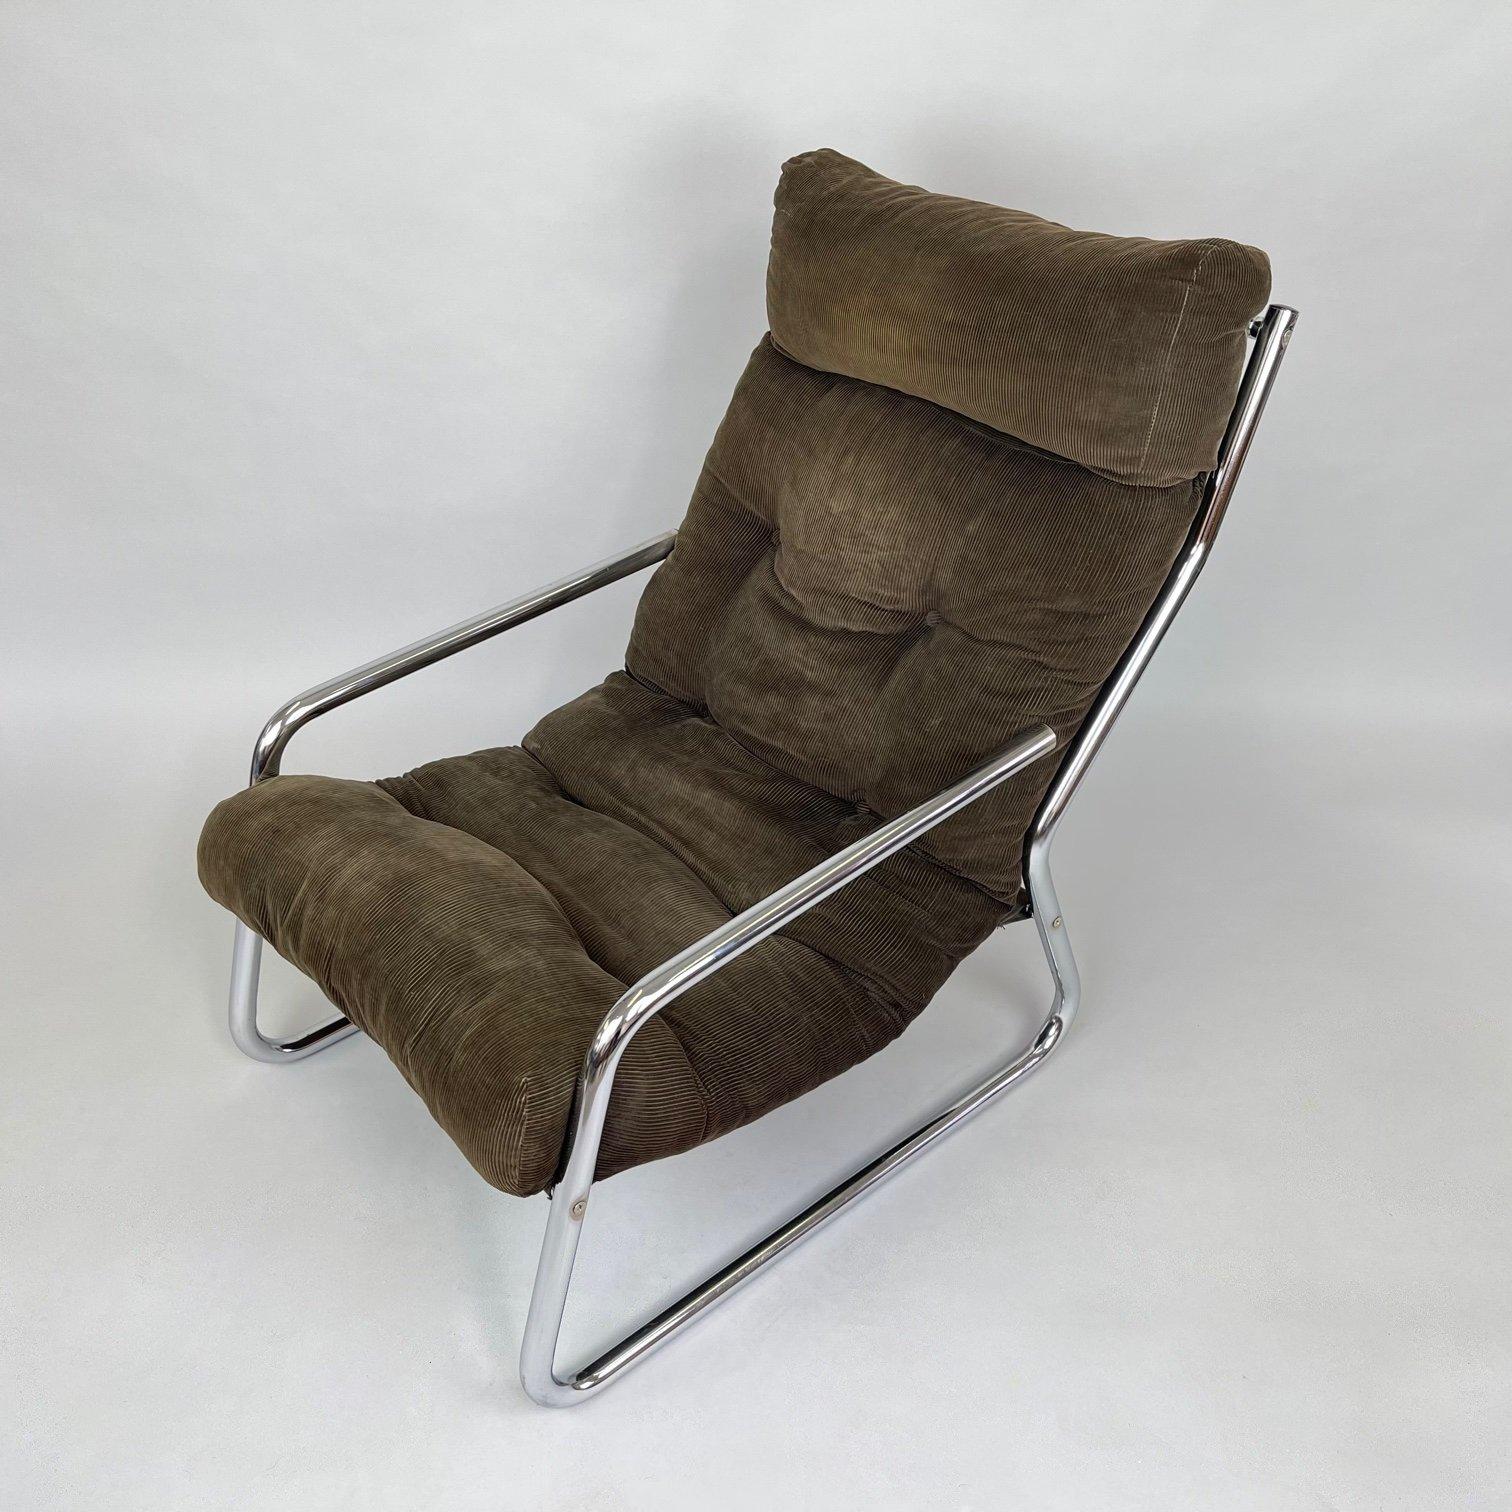 peter hoyte sling chair